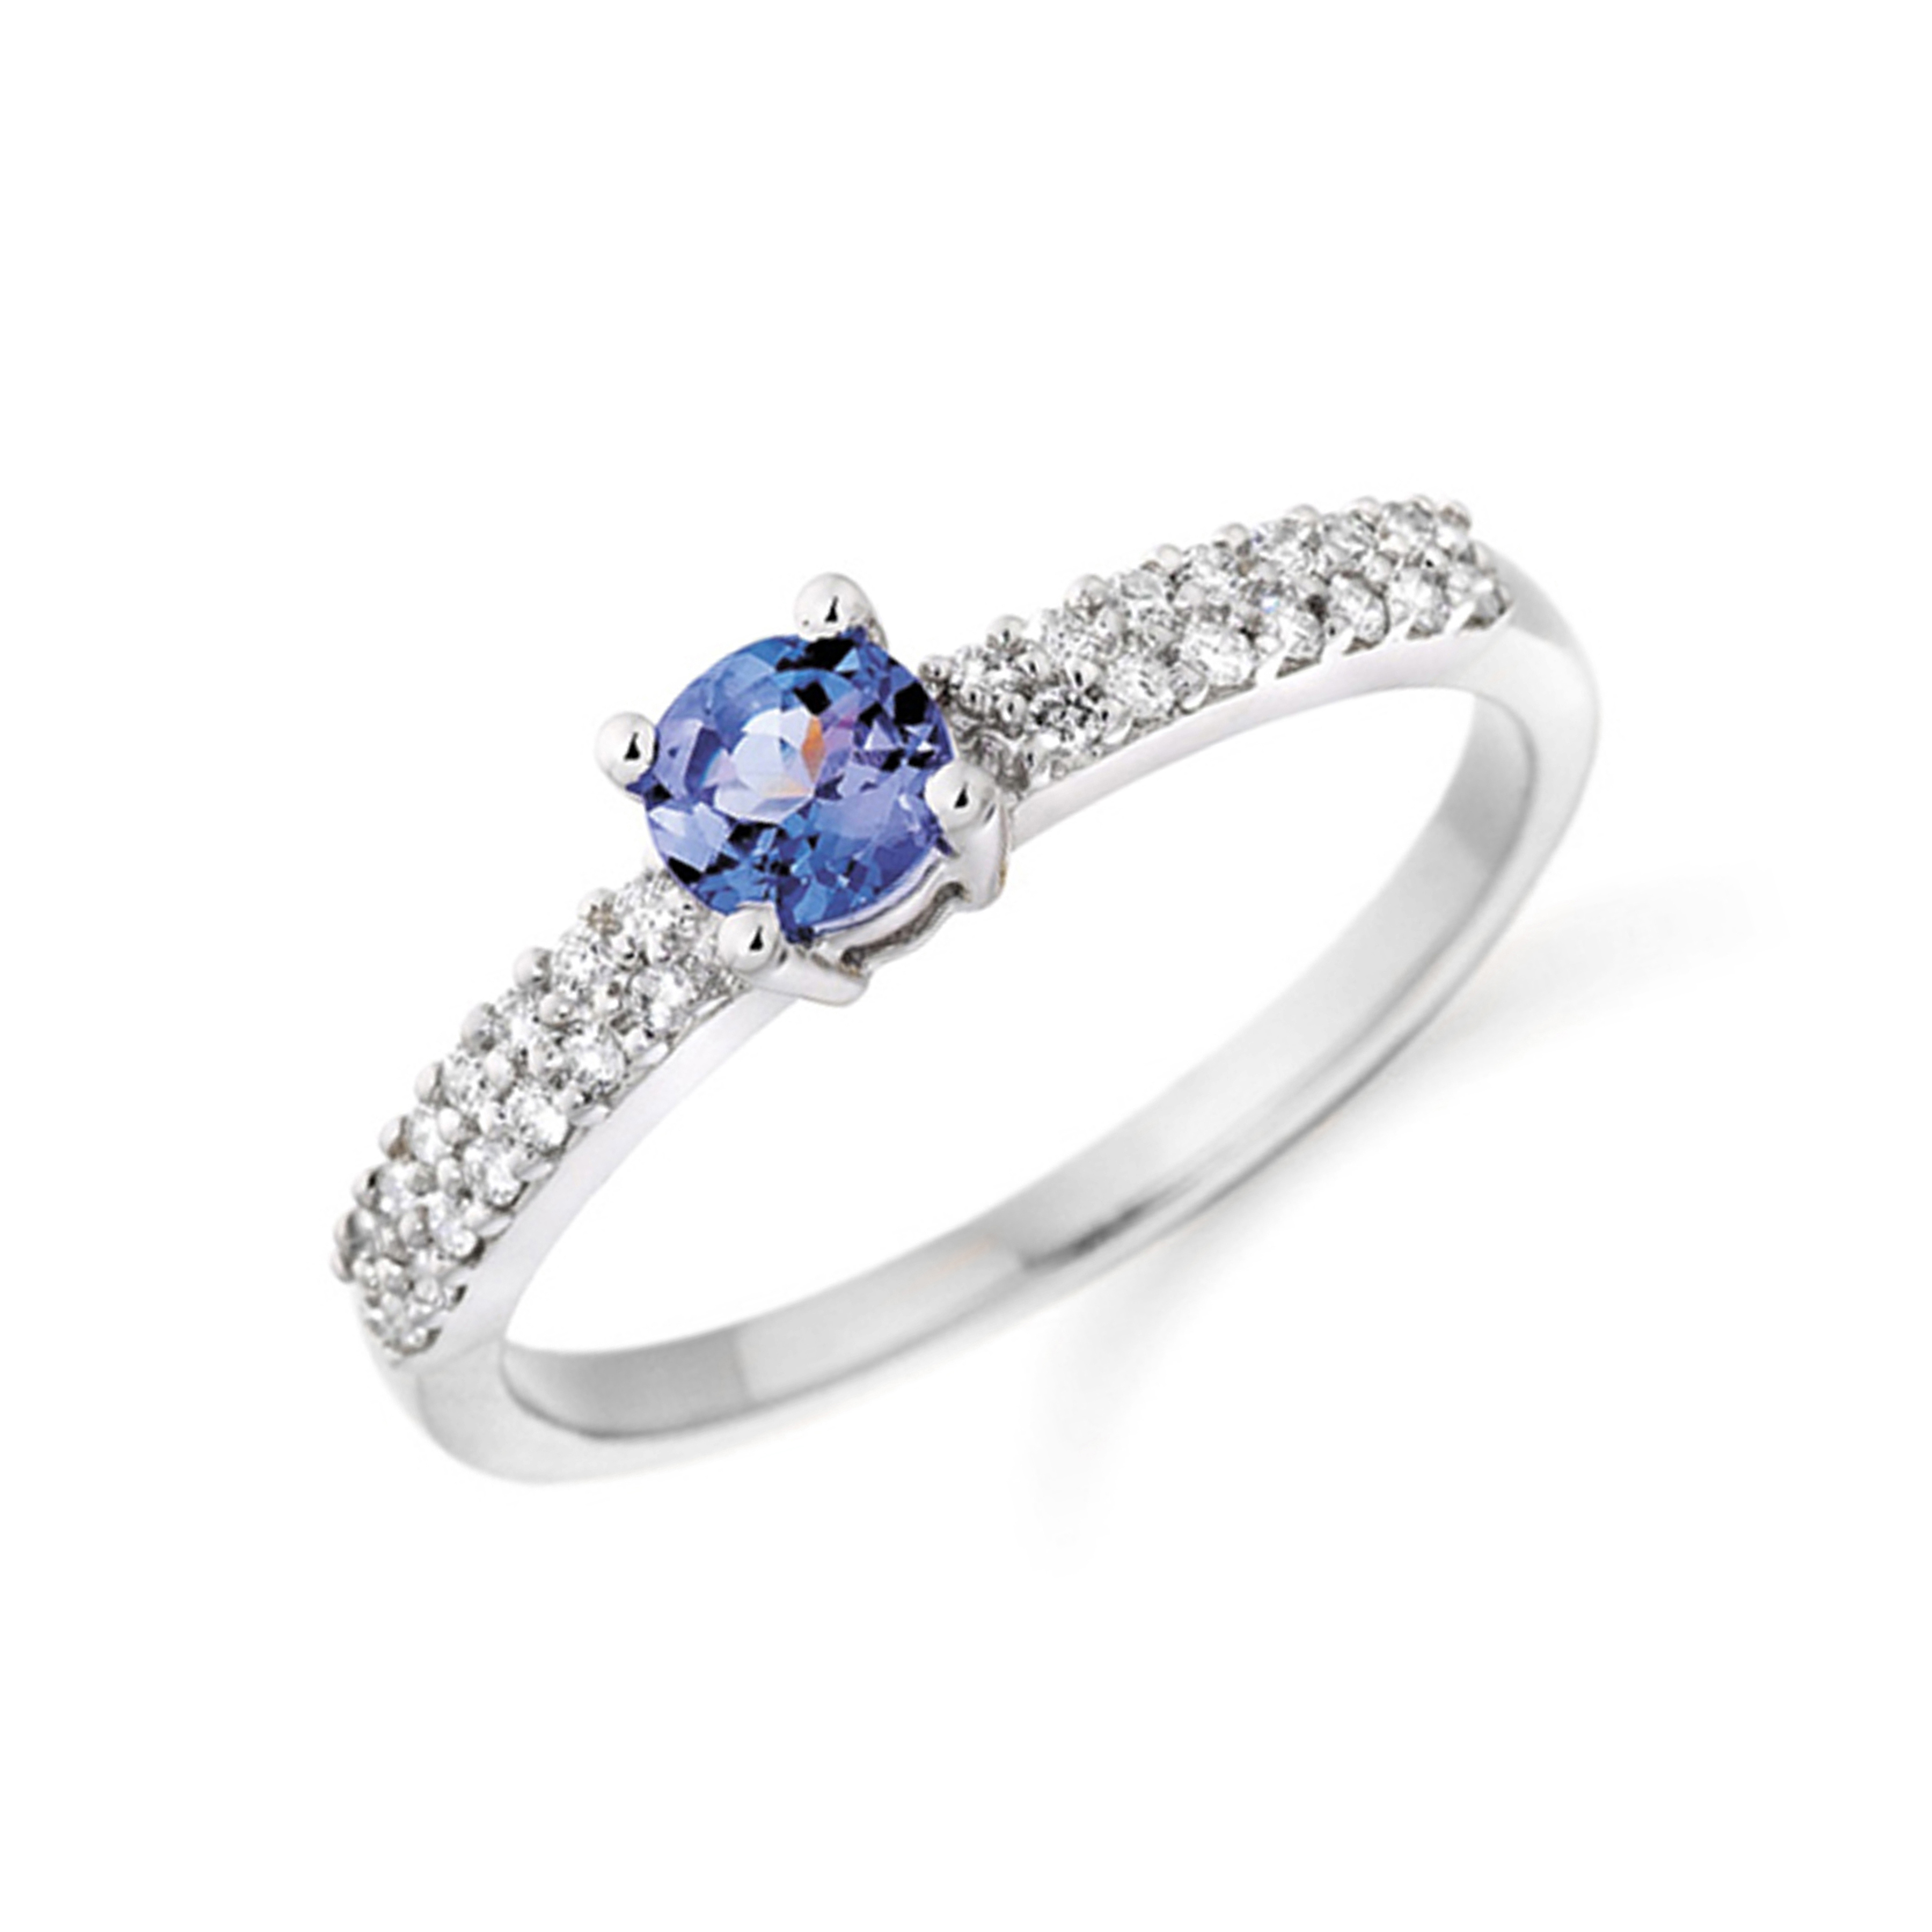 5mm Round Tanzanite Stones On Shoulder Diamond And Gemstone Engagement Ring